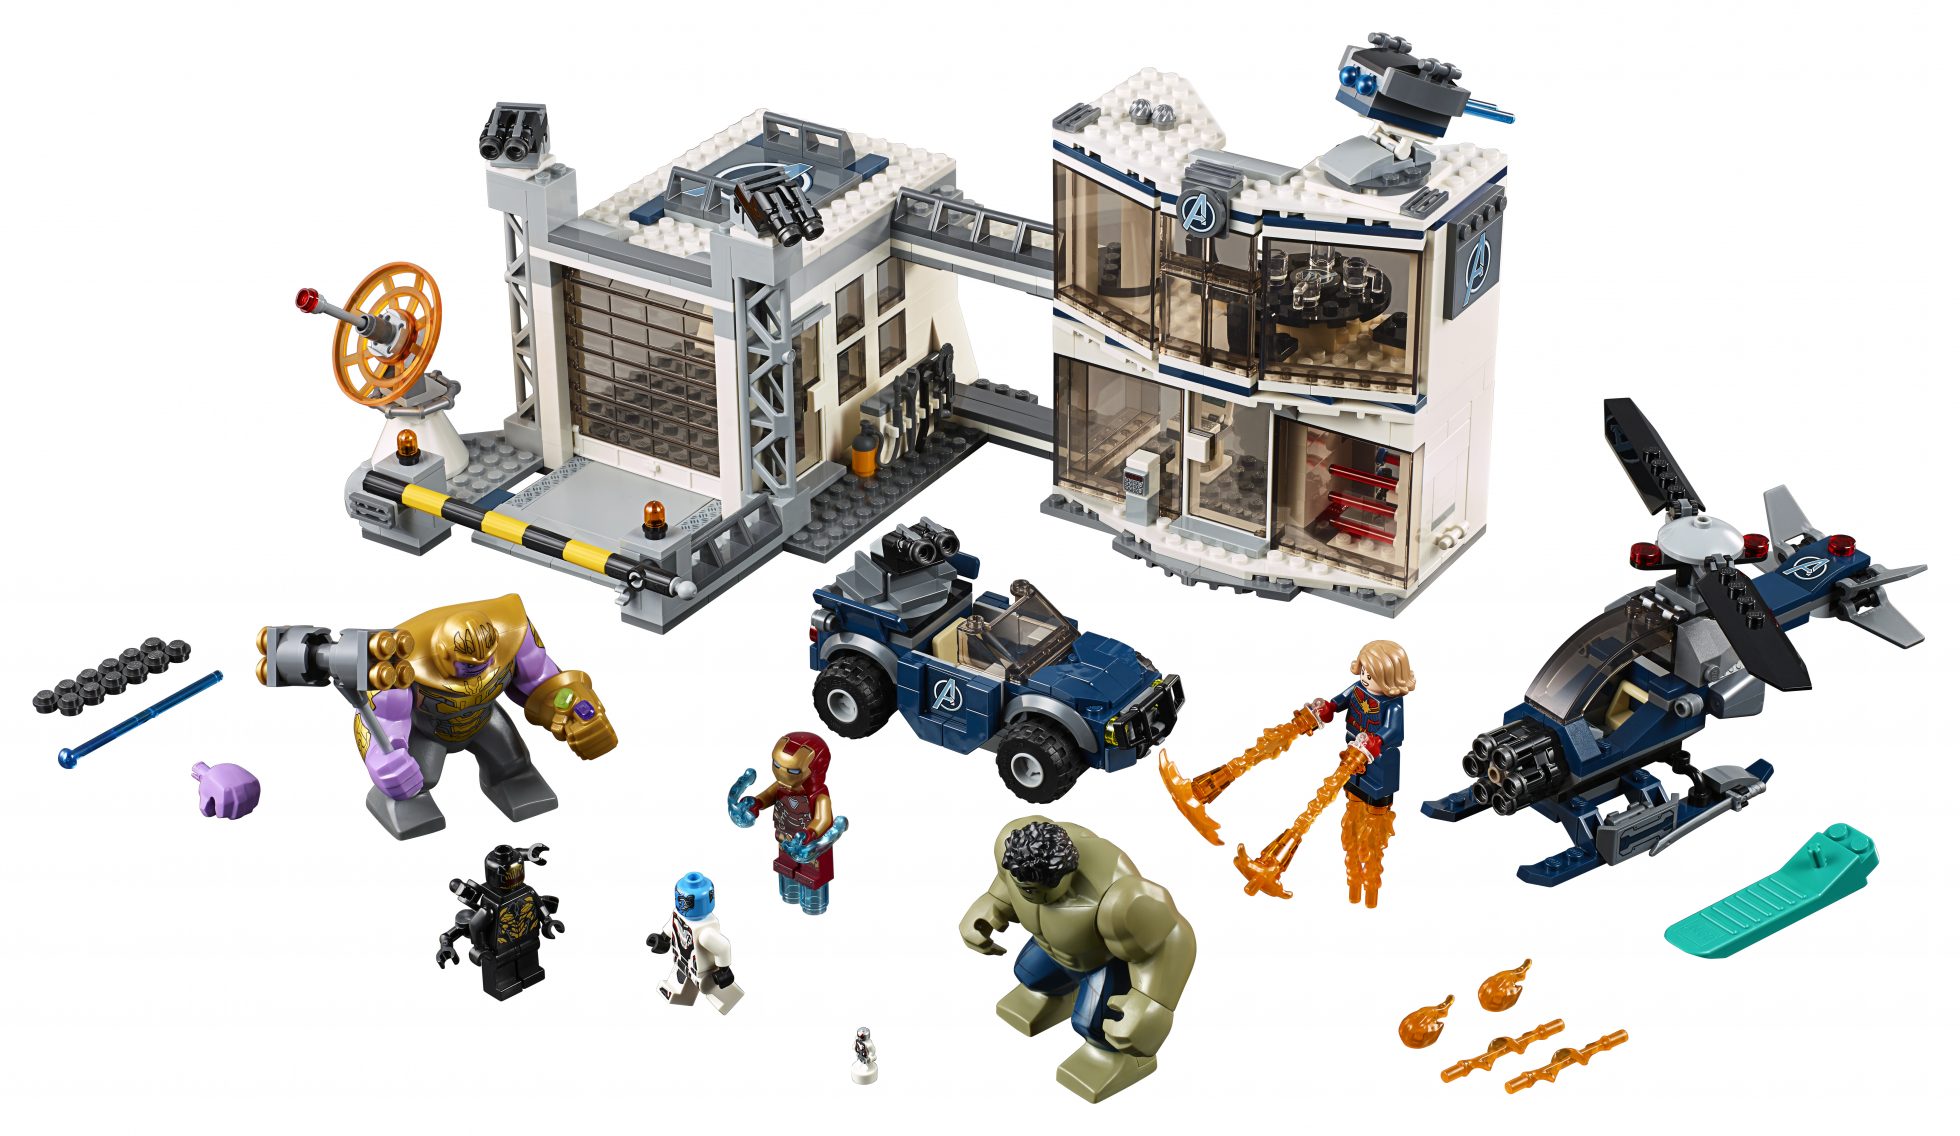 Marvel Avengers: Endgame LEGO Set - Avengers Compound Battle